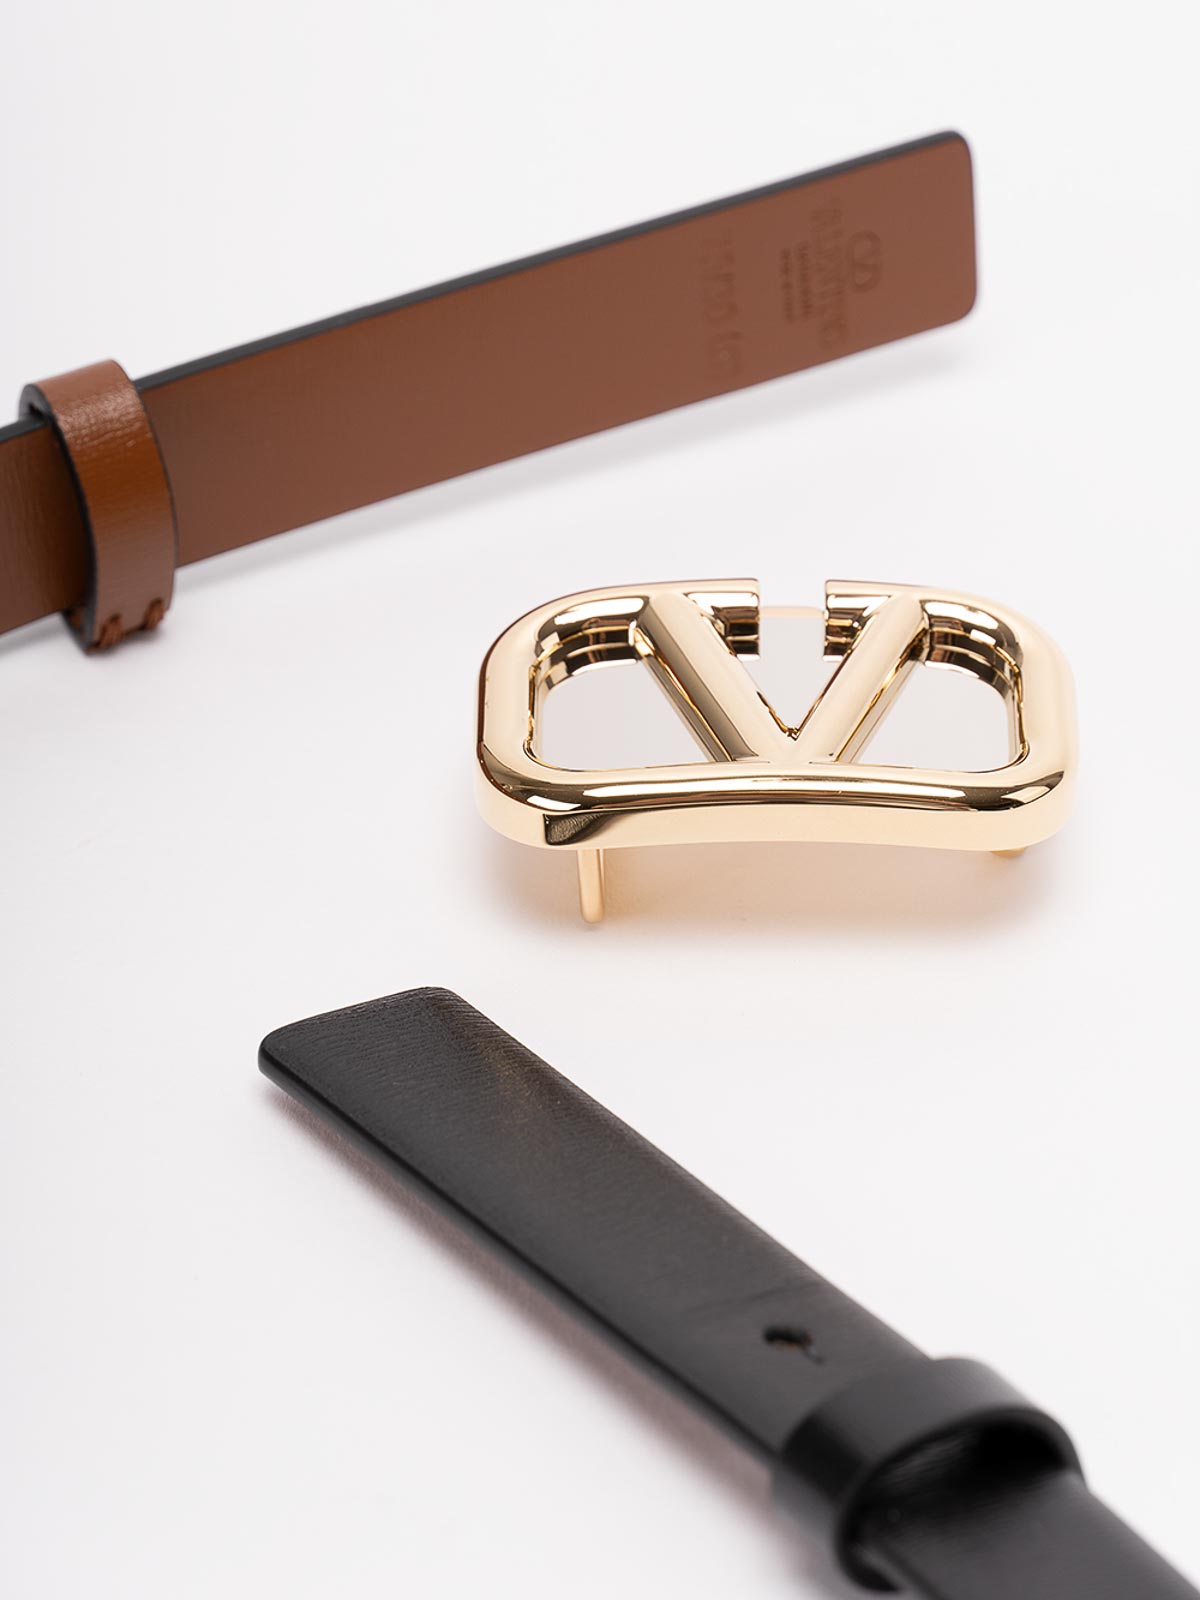 VALENTINO GARAVANI: VLogo Signature reversible leather belt - Leather